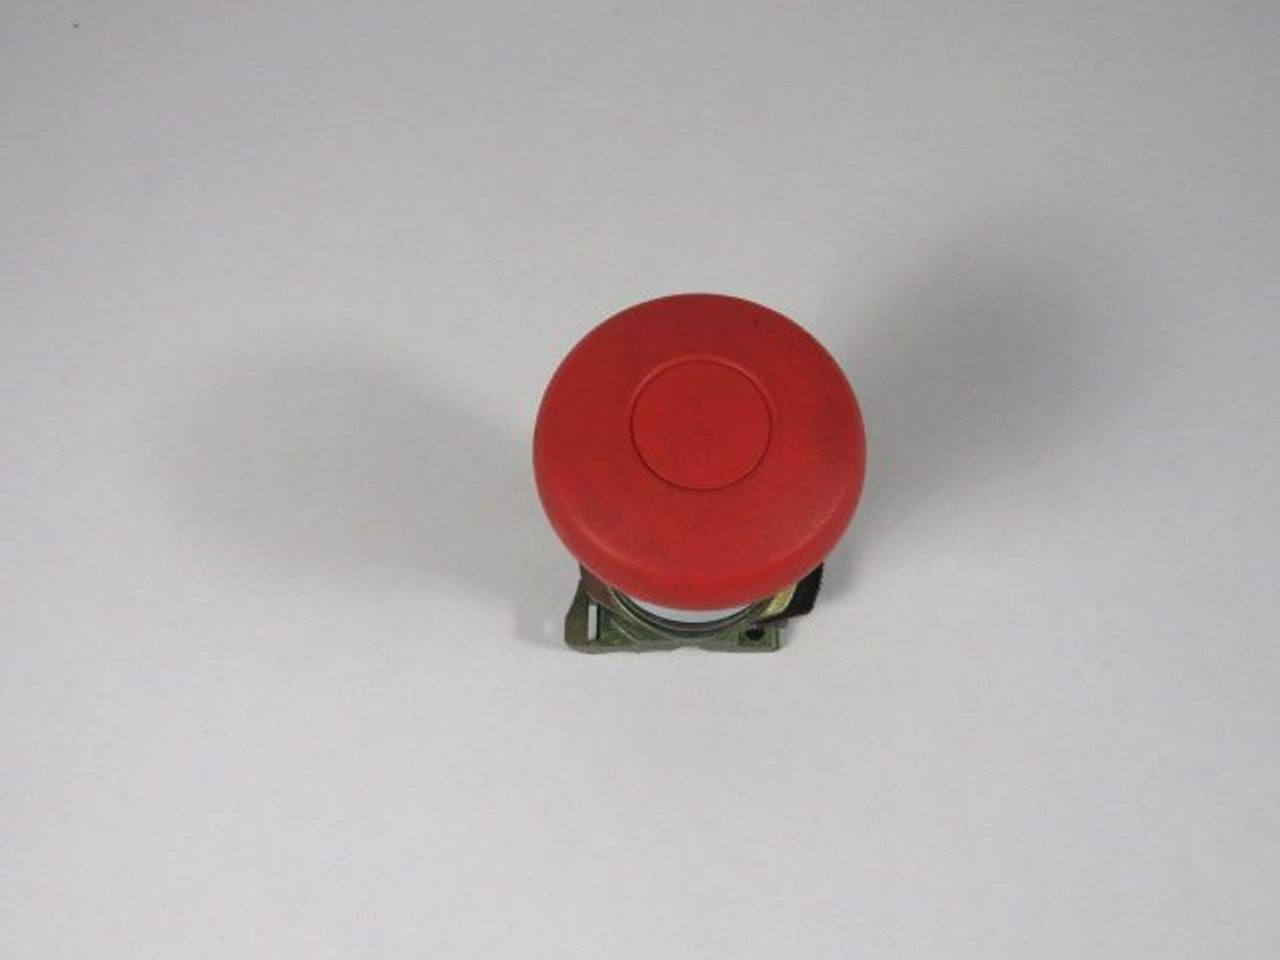 Allen-Bradley 800FM-MP44 Push-Pull Red Mushroom Push Button Operator USED